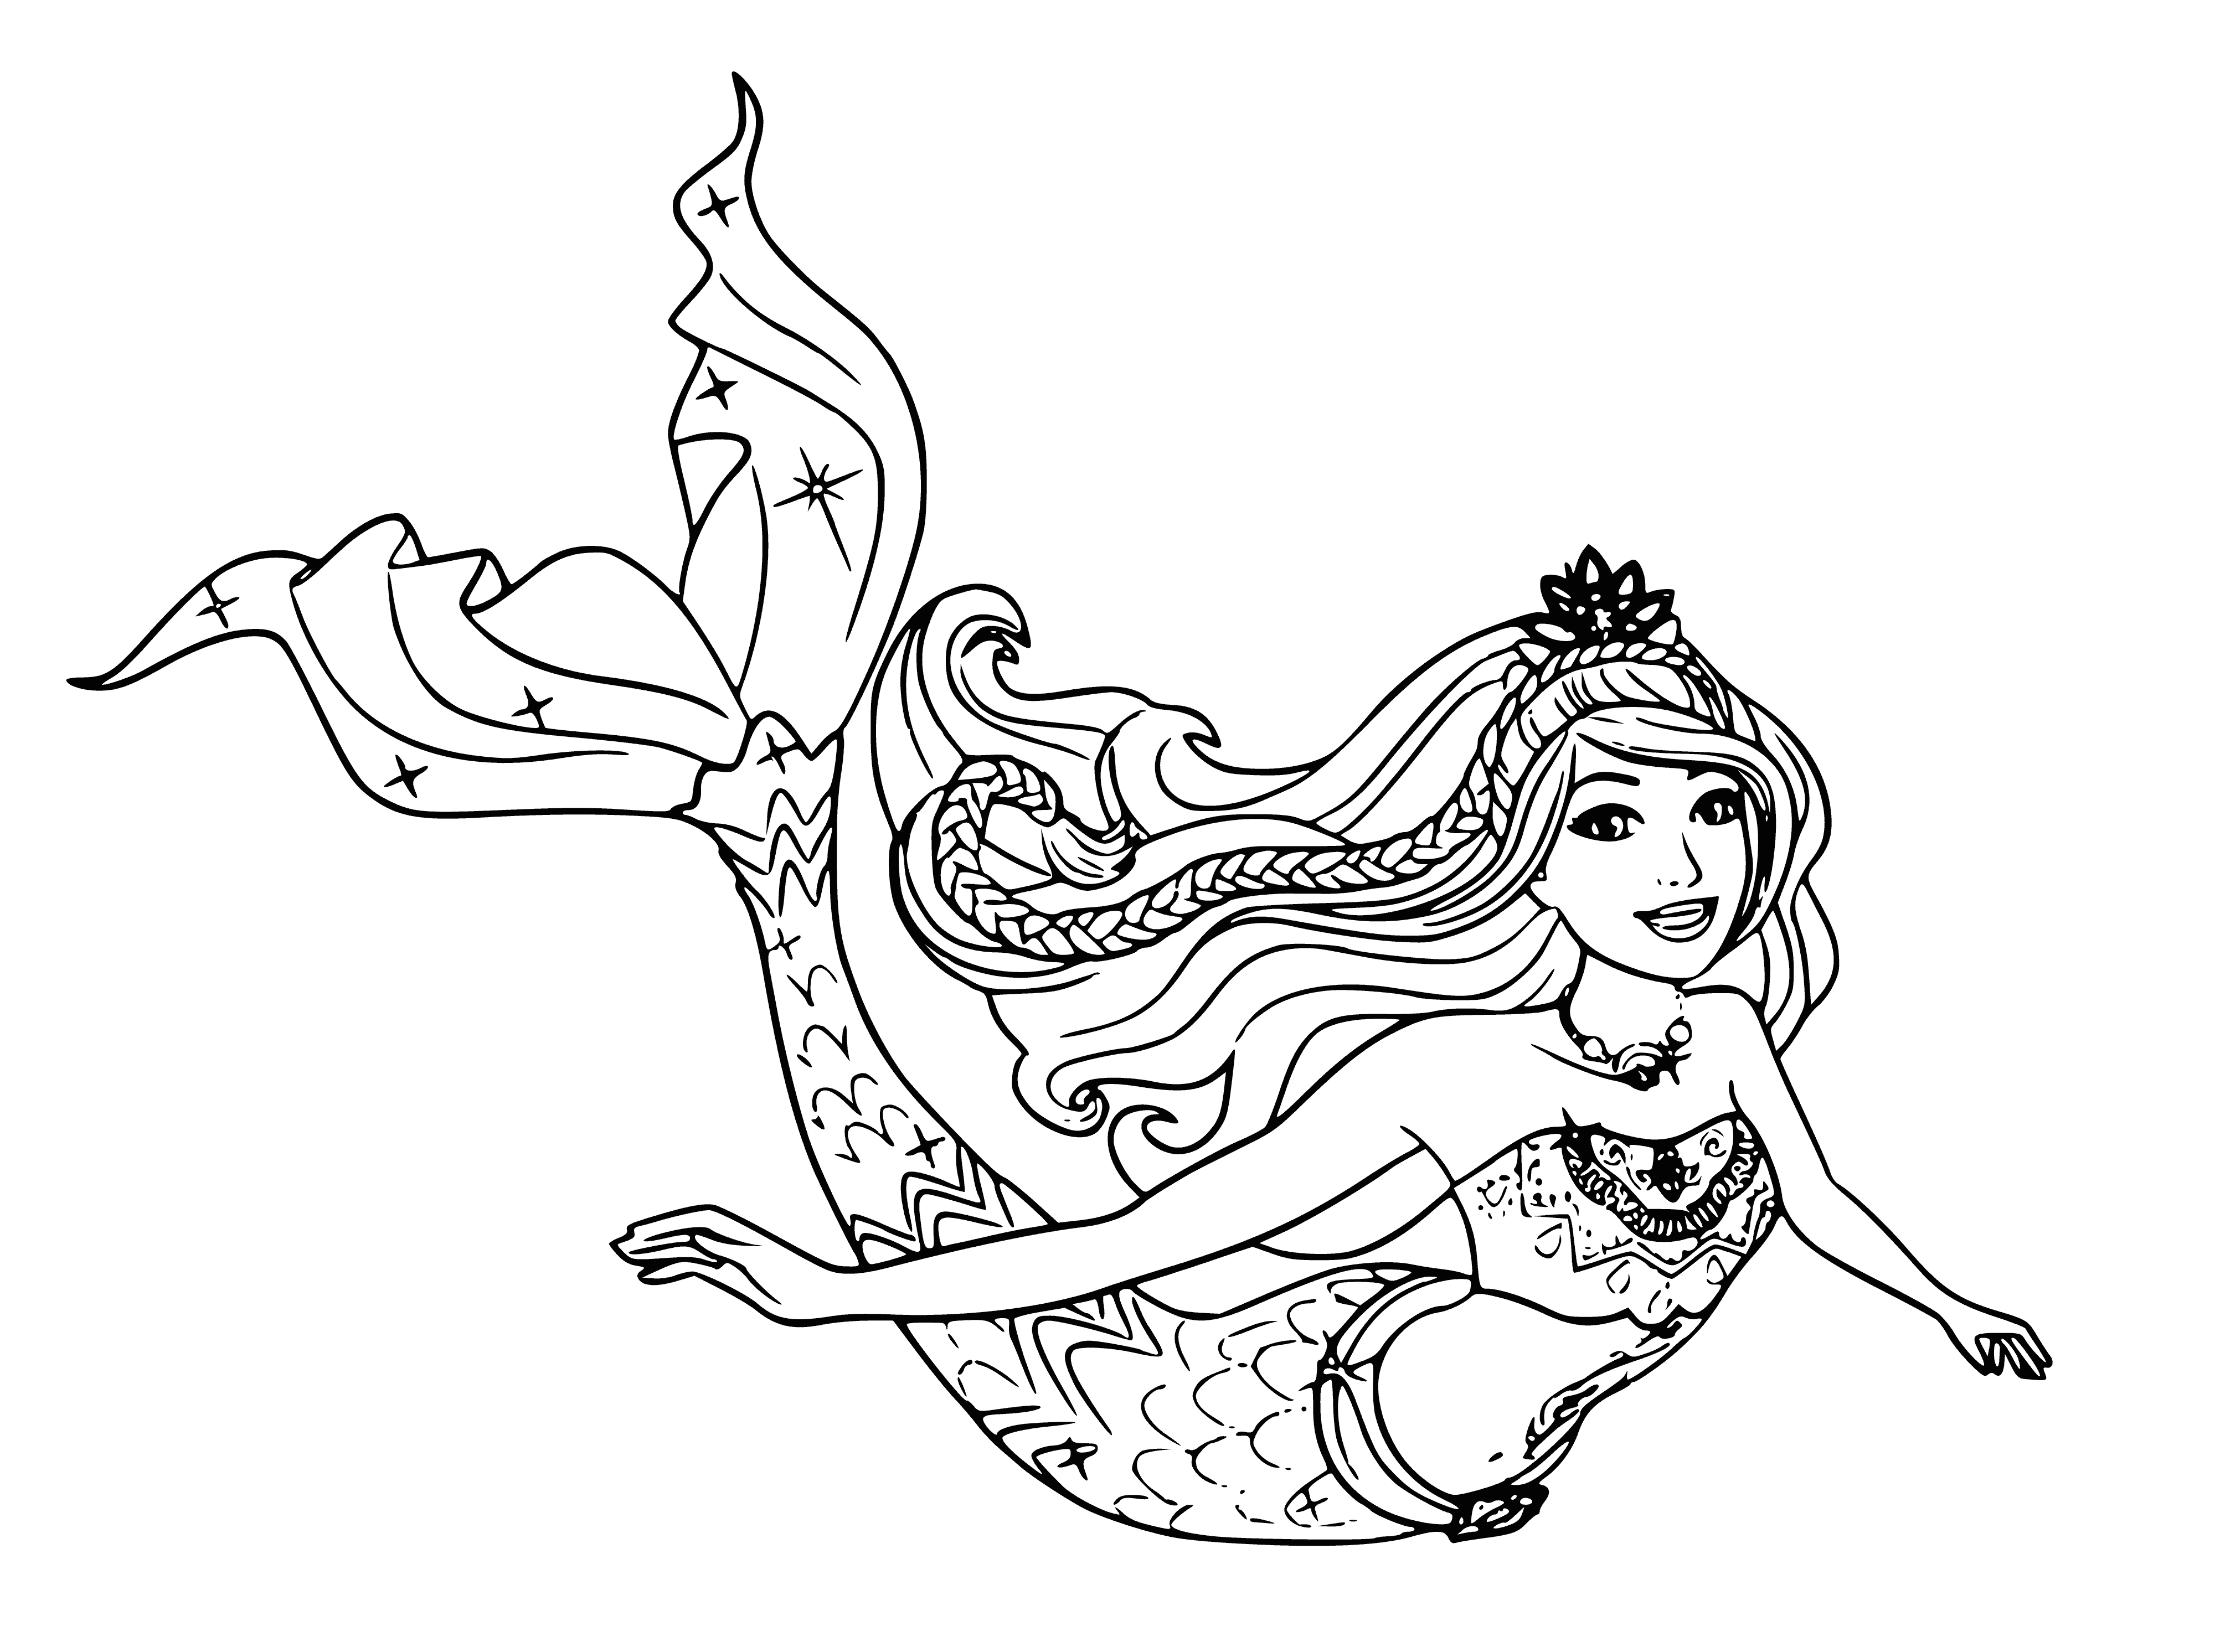 coloring page: #Mermaids #Coloring #KidsActivity